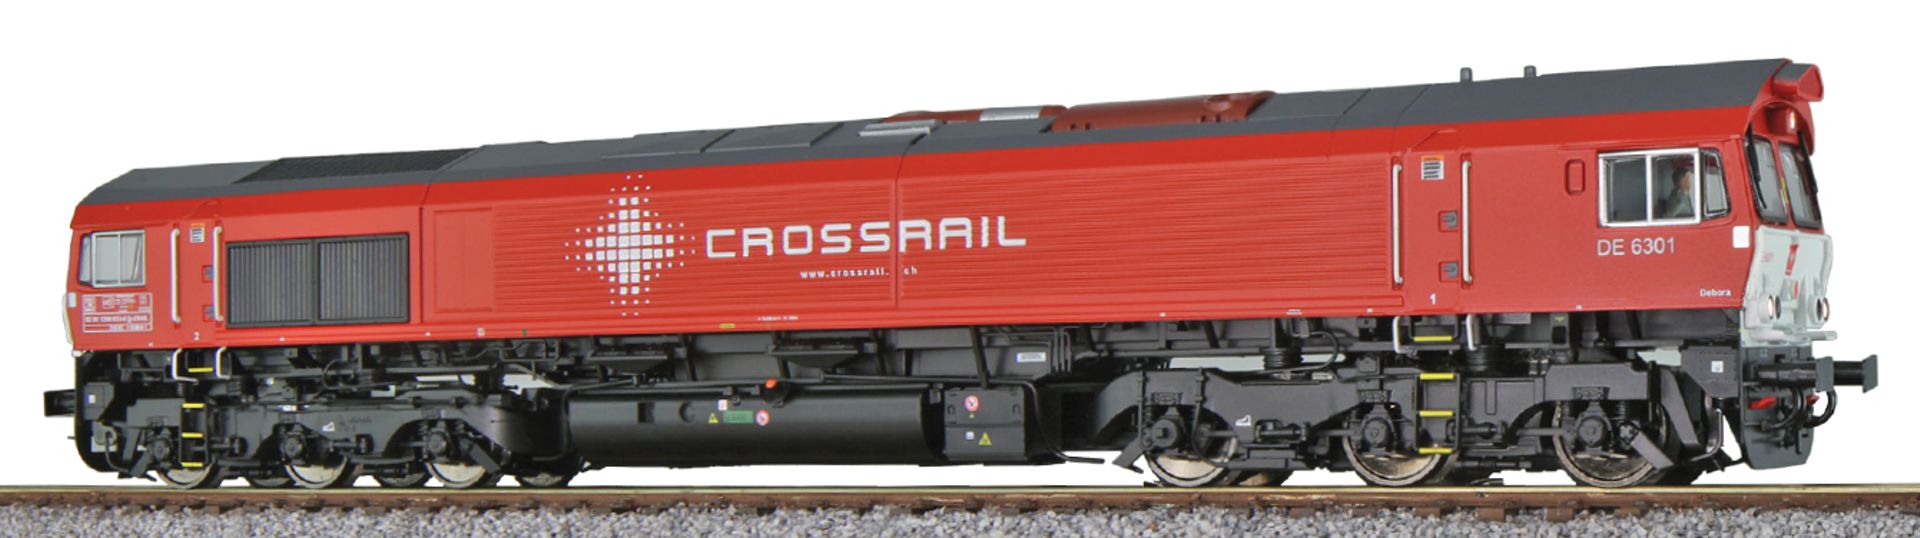 ESU 31363 - Diesellok Class 66, DE 6301, Crossrail, Ep VI, DC+AC-Sound